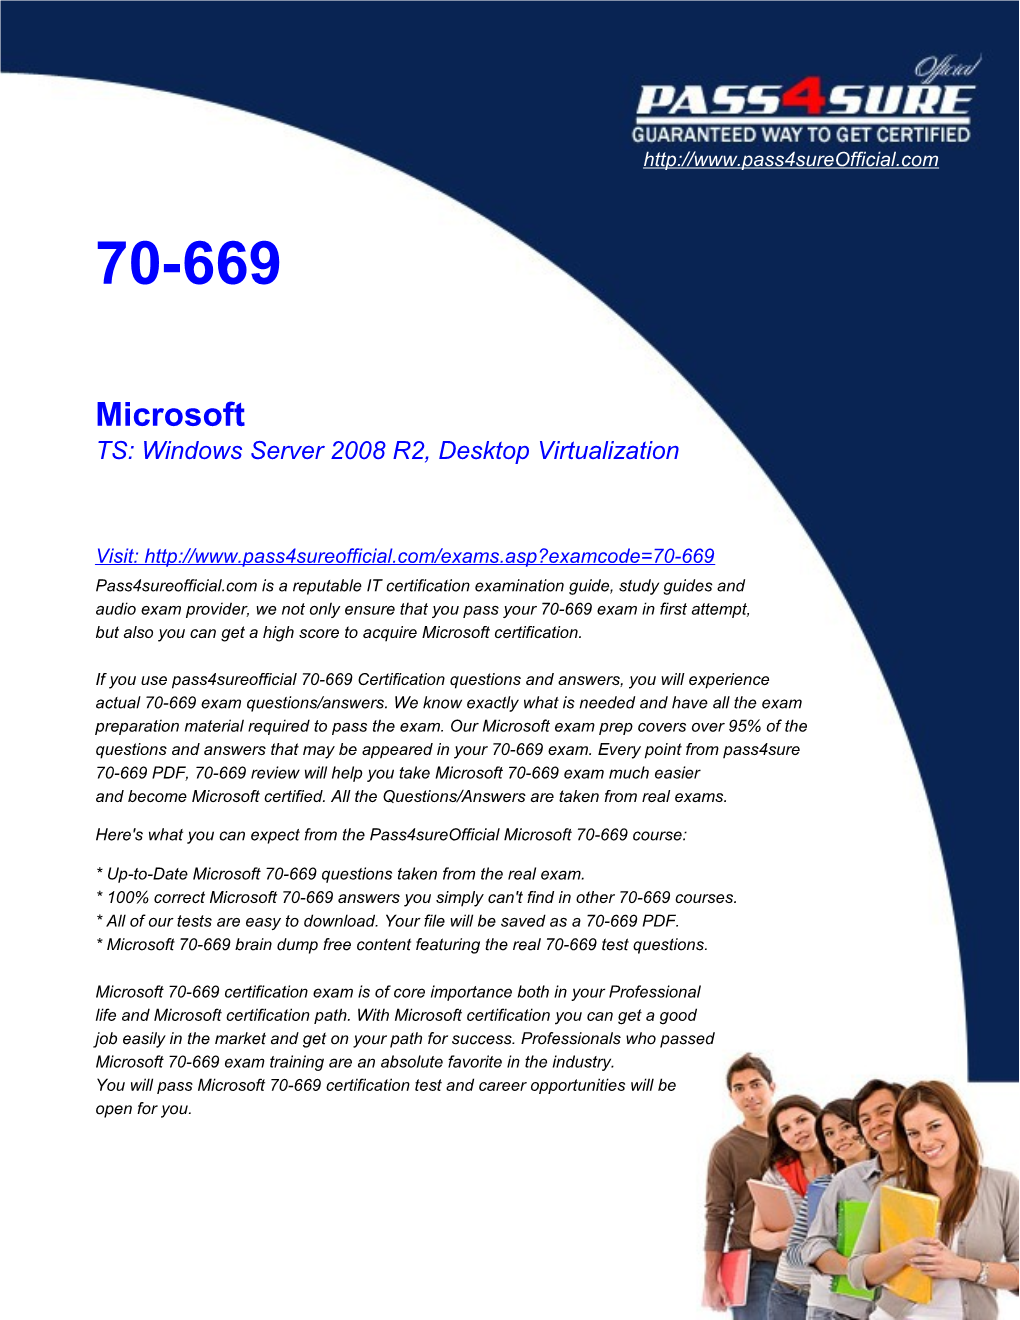 TS: Windows Server 2008 R2, Desktop Virtualization